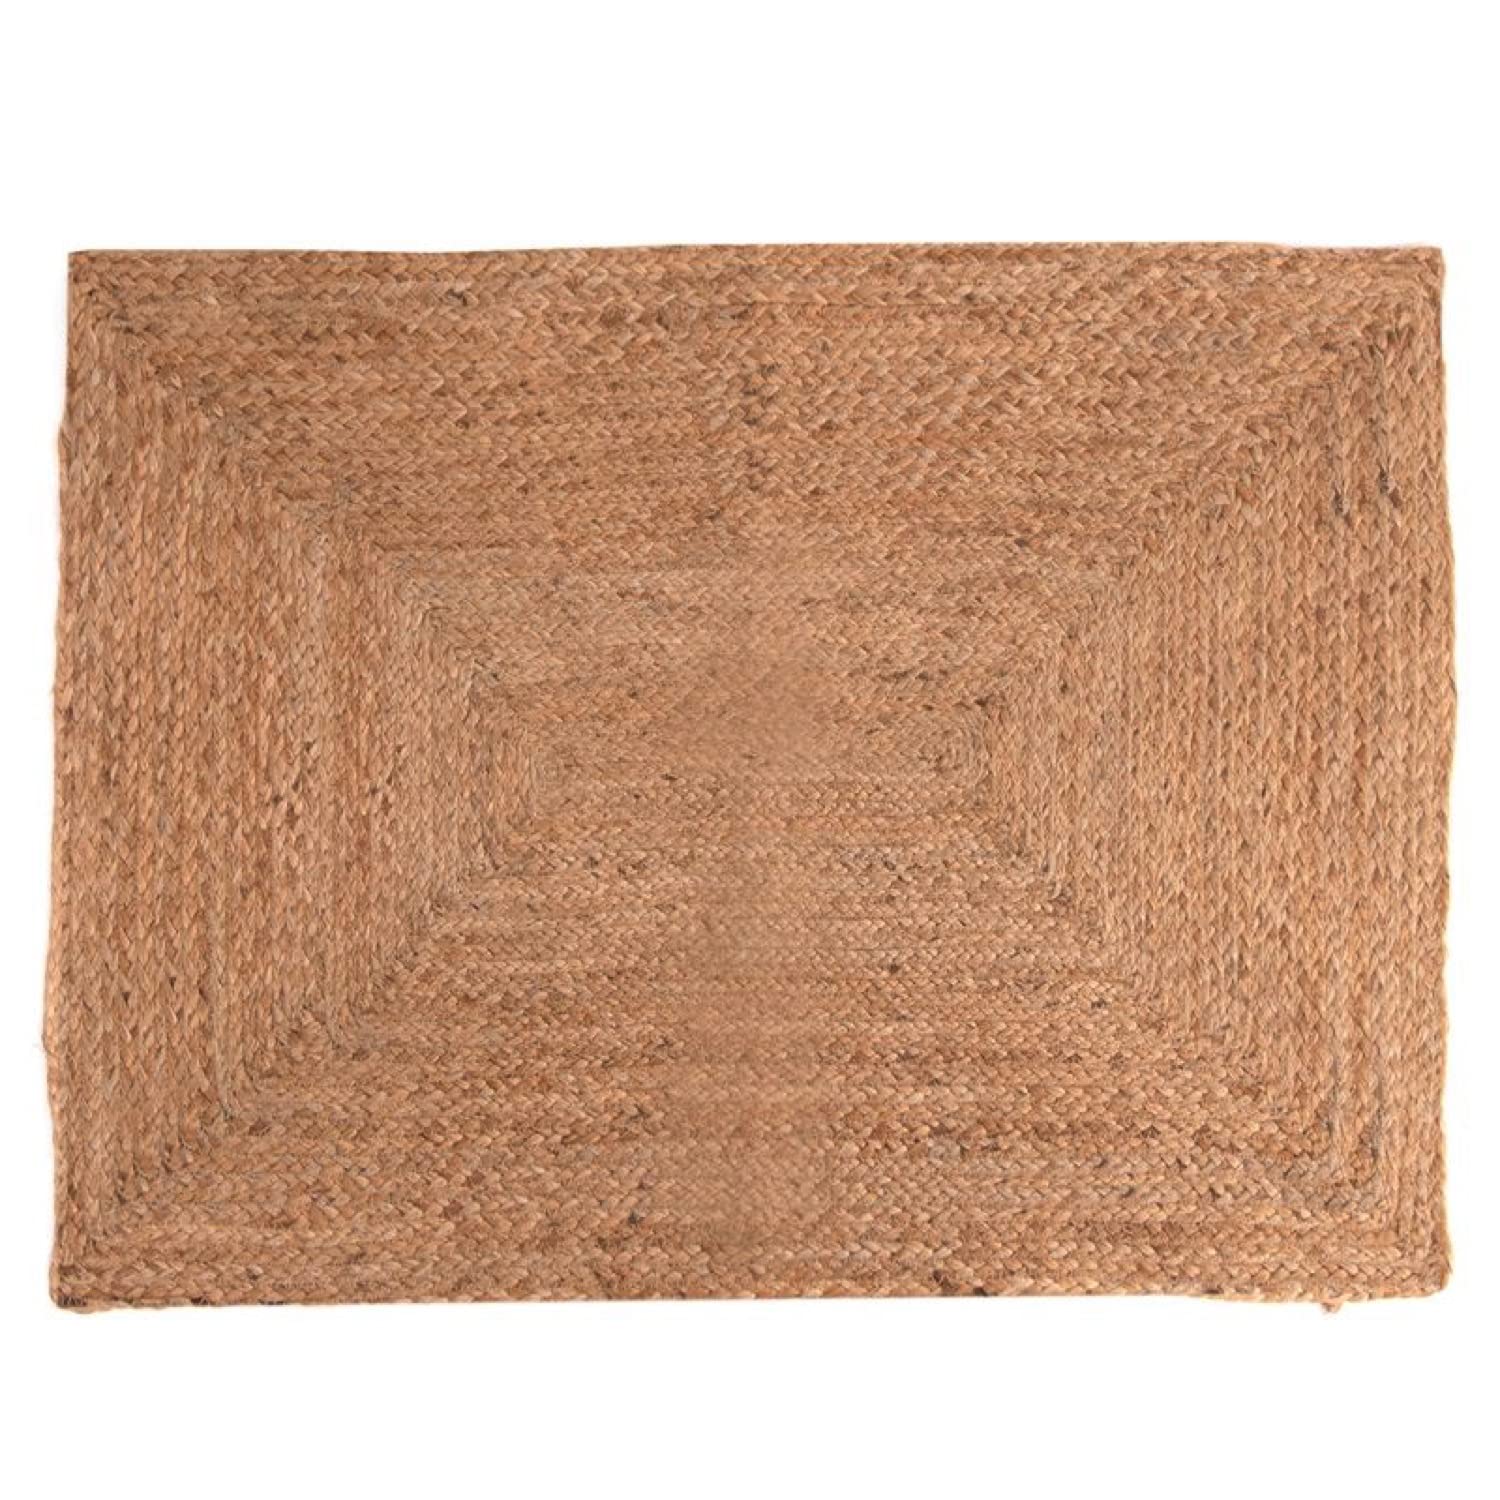 CIAL LAMA Teppich, groß, rechteckig, 160 x 230 cm